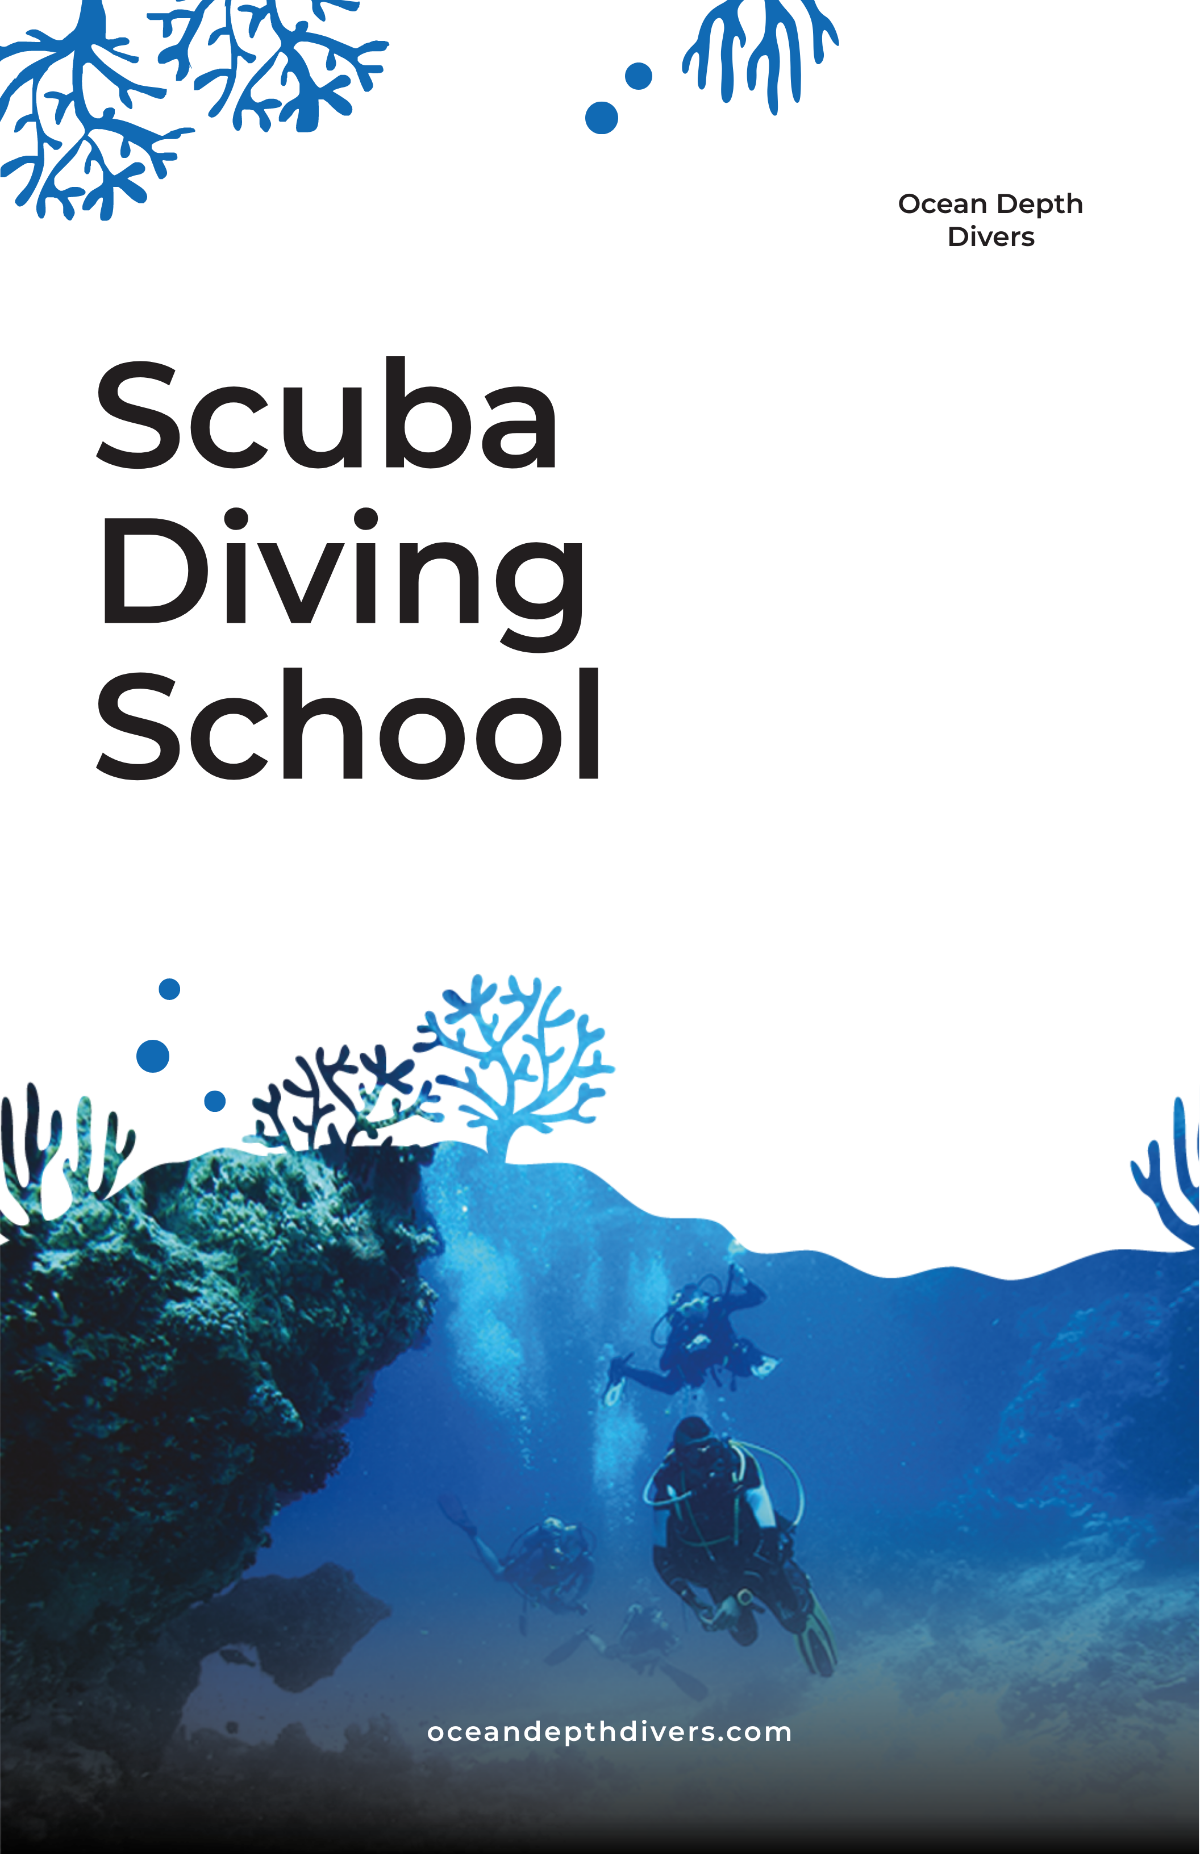 Scuba Diving School Poster Template